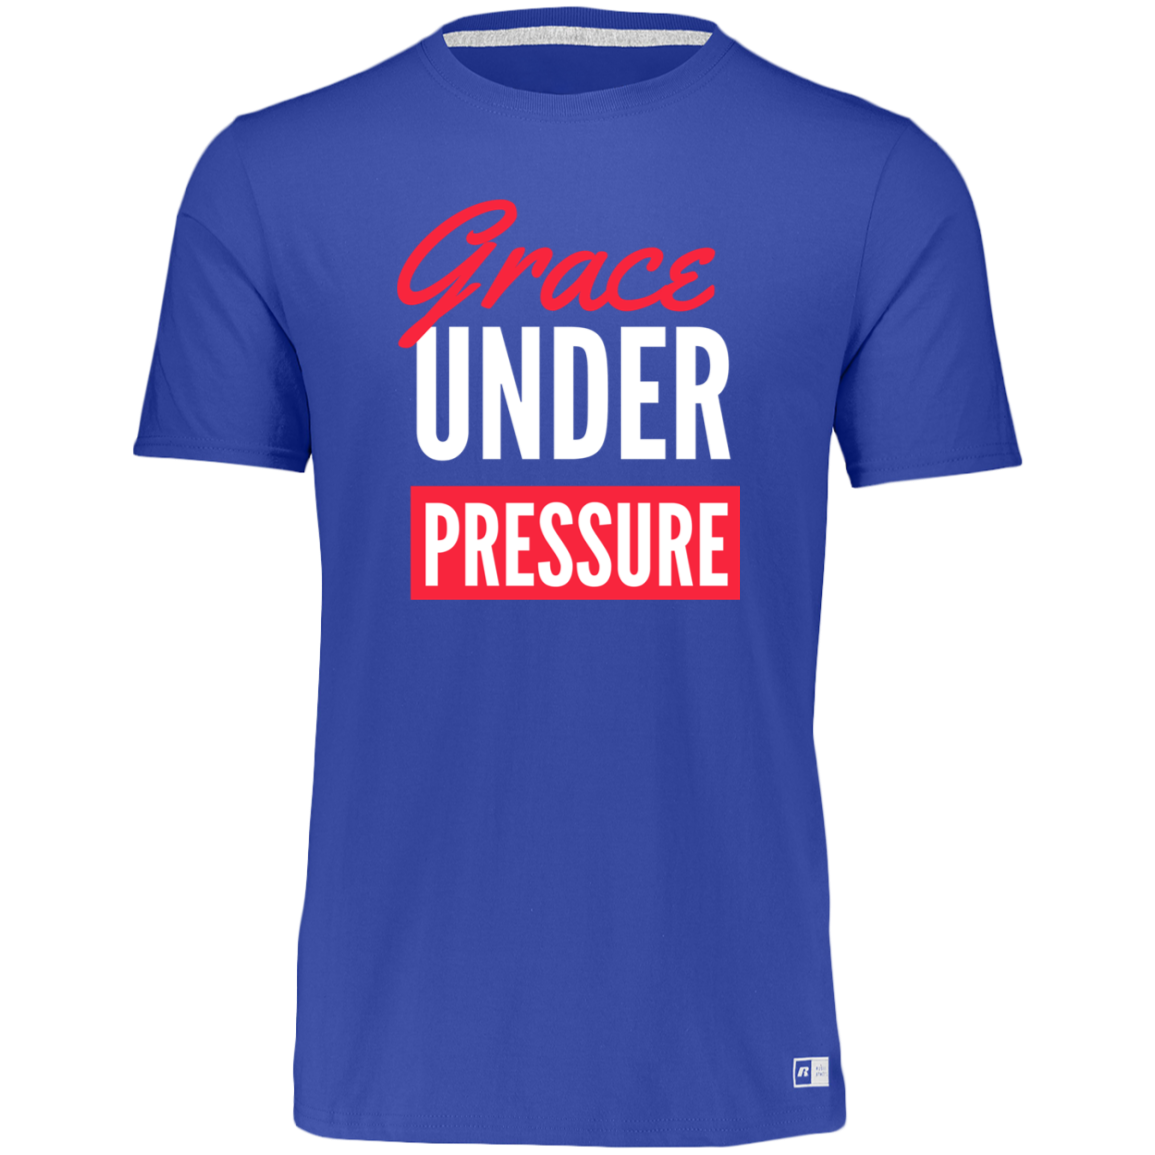 Unisex Dri-Power Tee--Grace Under Pressure,